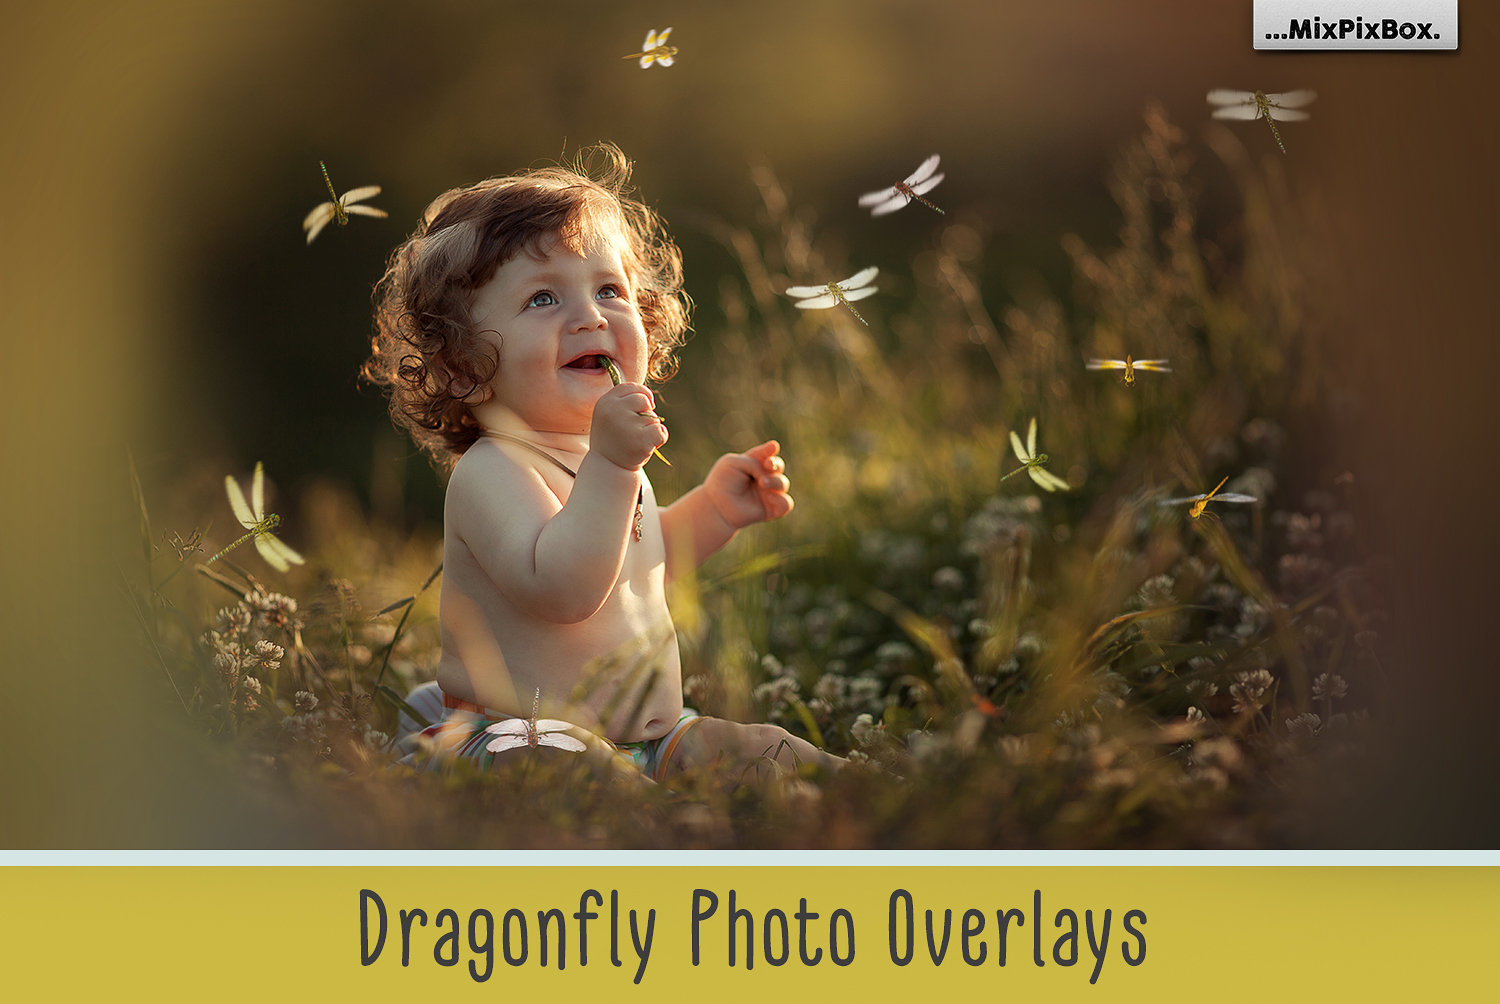 20 Dragonfly Photo Overlays